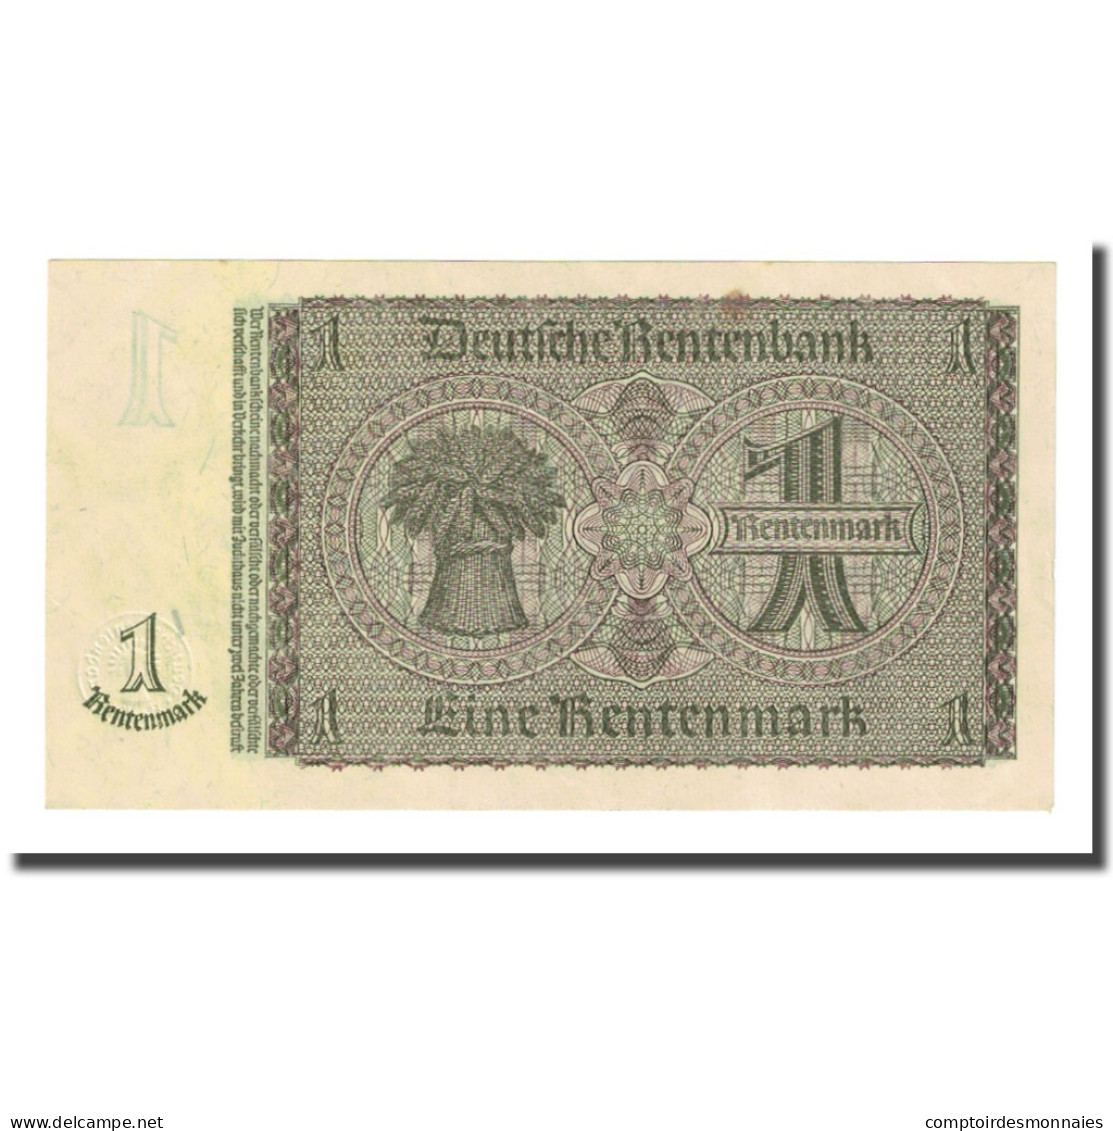 Billet, Allemagne, 1 Rentenmark, 1937-01-30, KM:173b, SUP - 1 Rentenmark